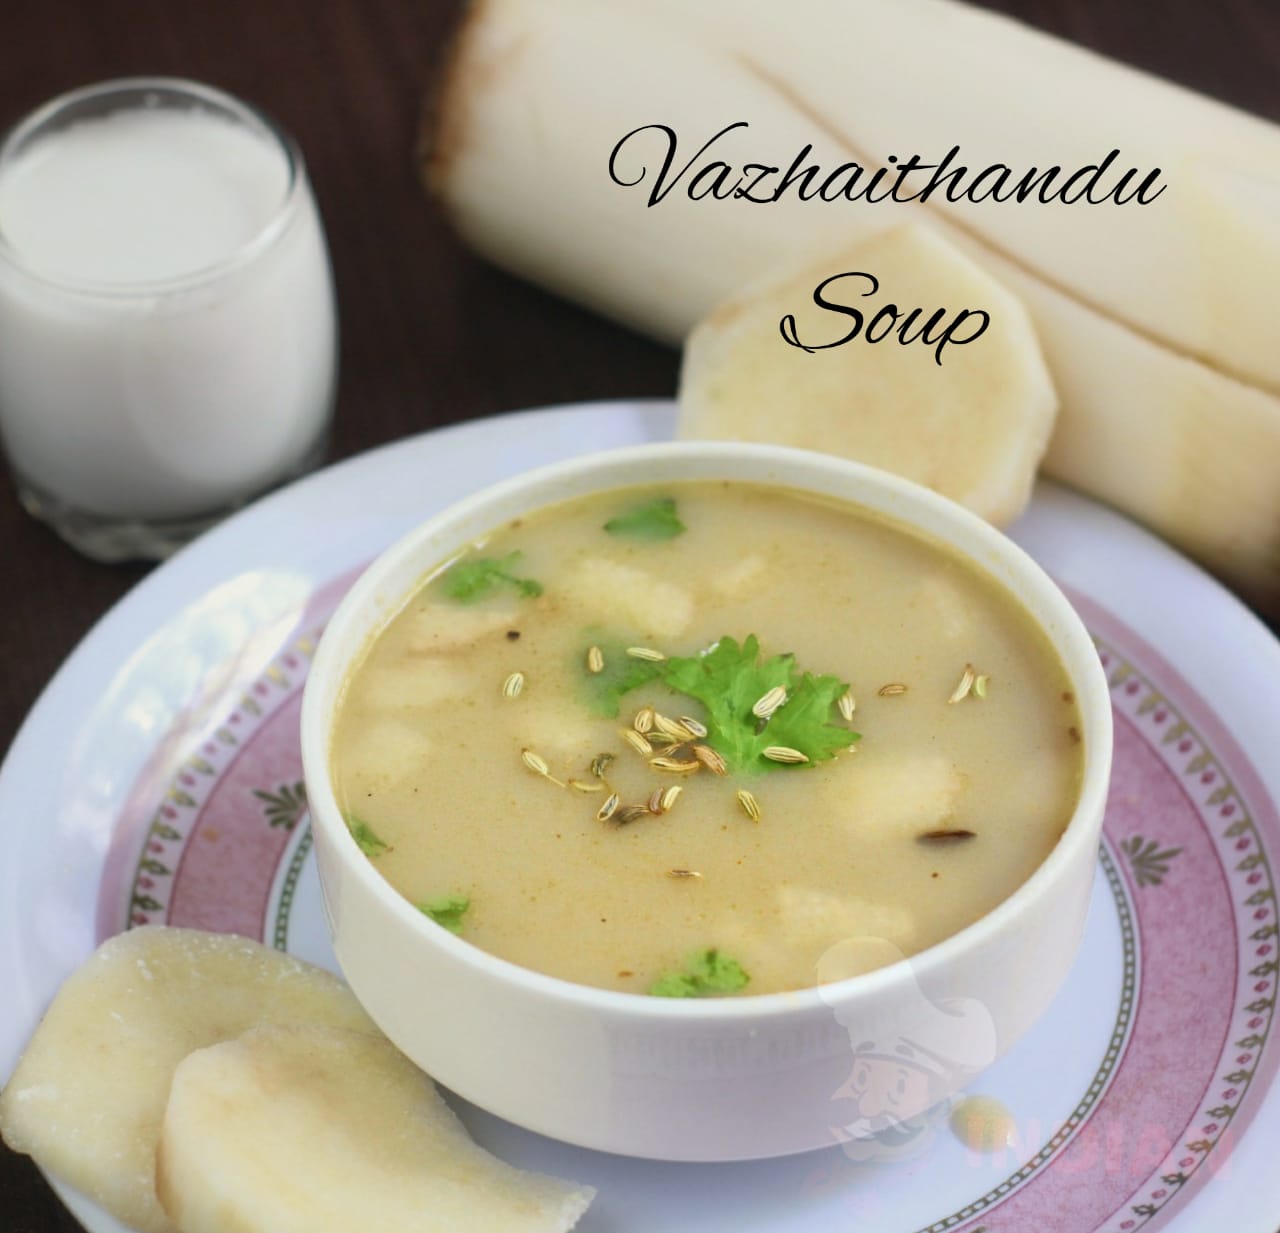 vazhaithandu soup with coconut milk